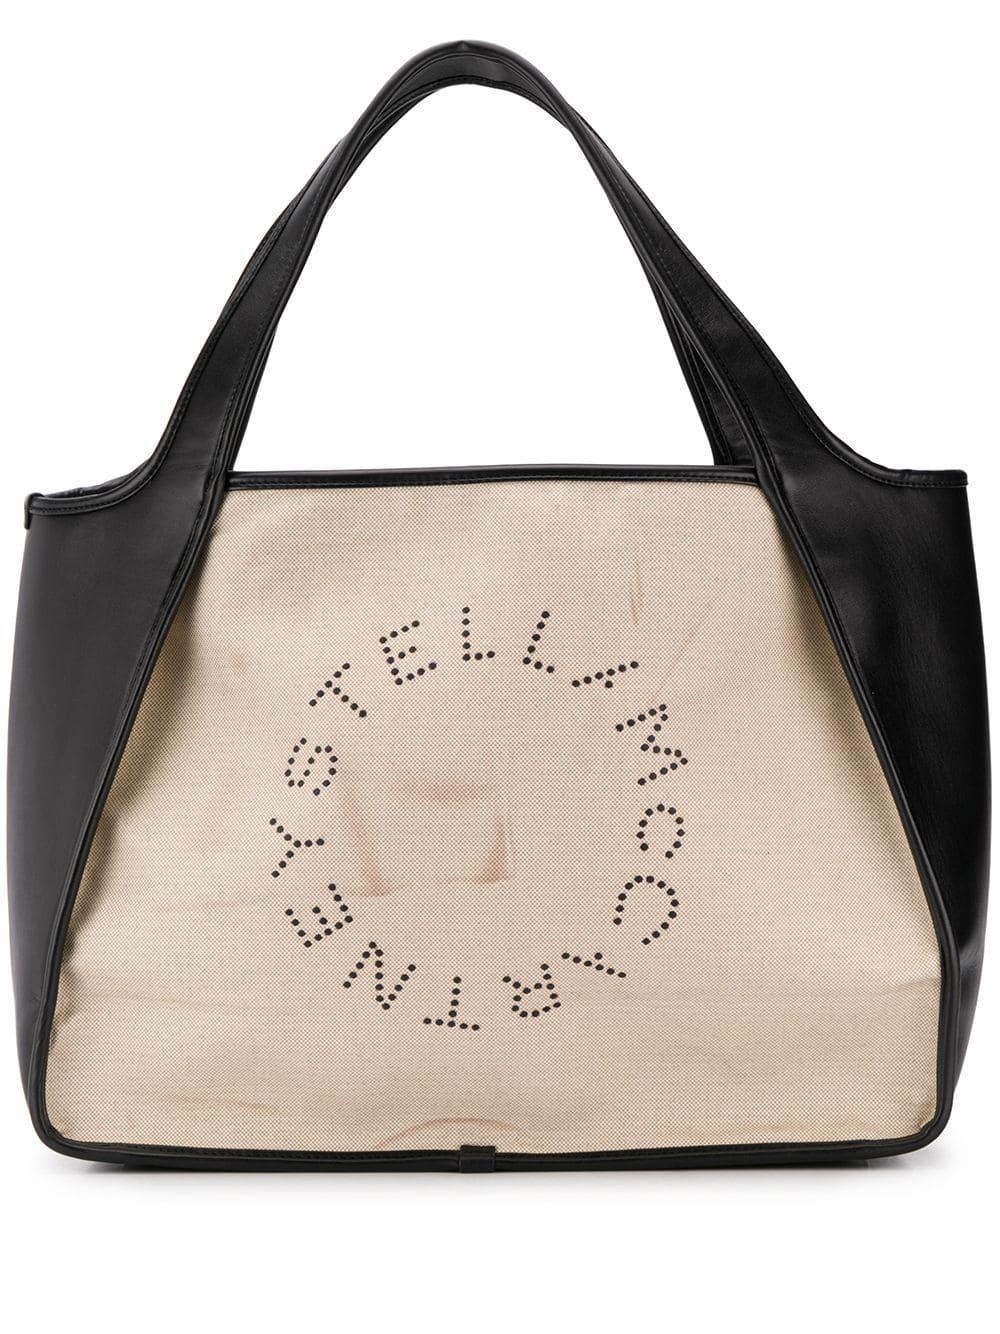 Stella McCartney Stella Logo Tote Bag in Black - Save 67% - Lyst